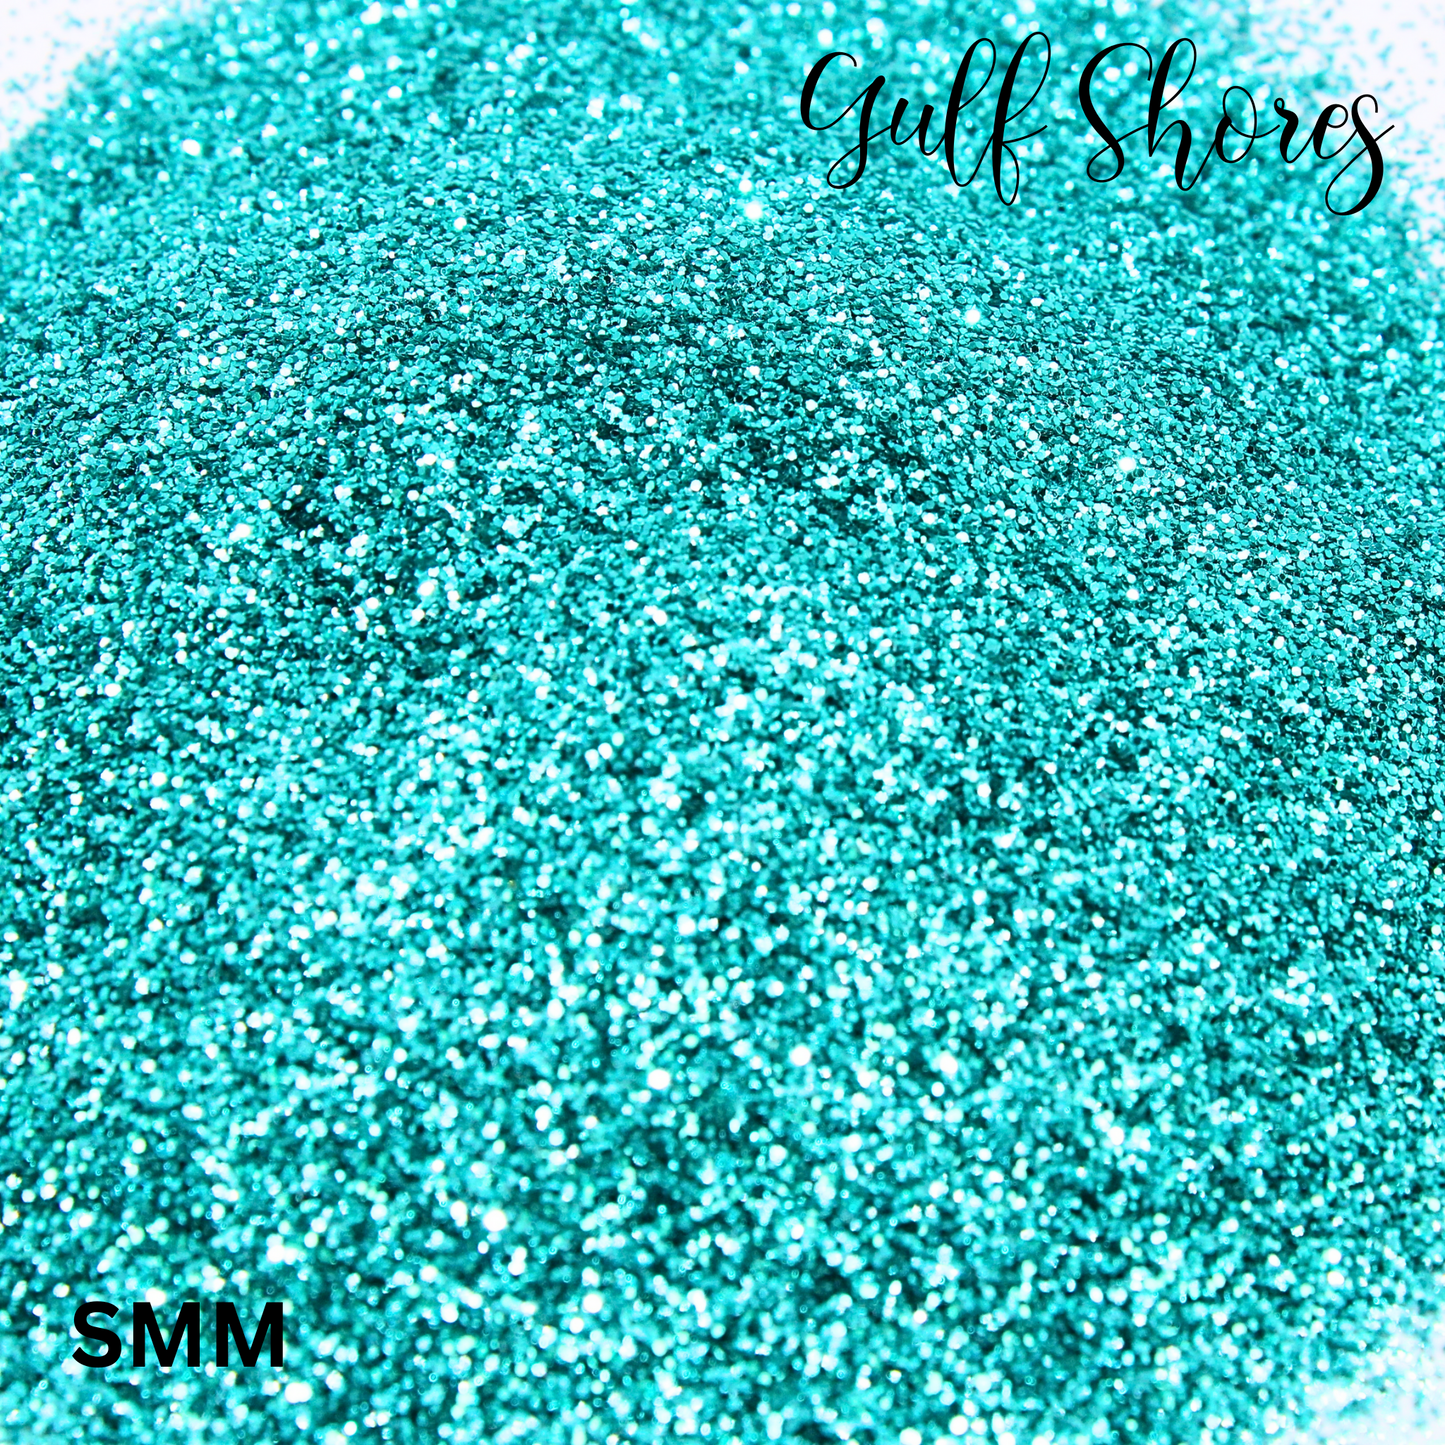 Gulf Shores Metallic Fine Glitter Mix